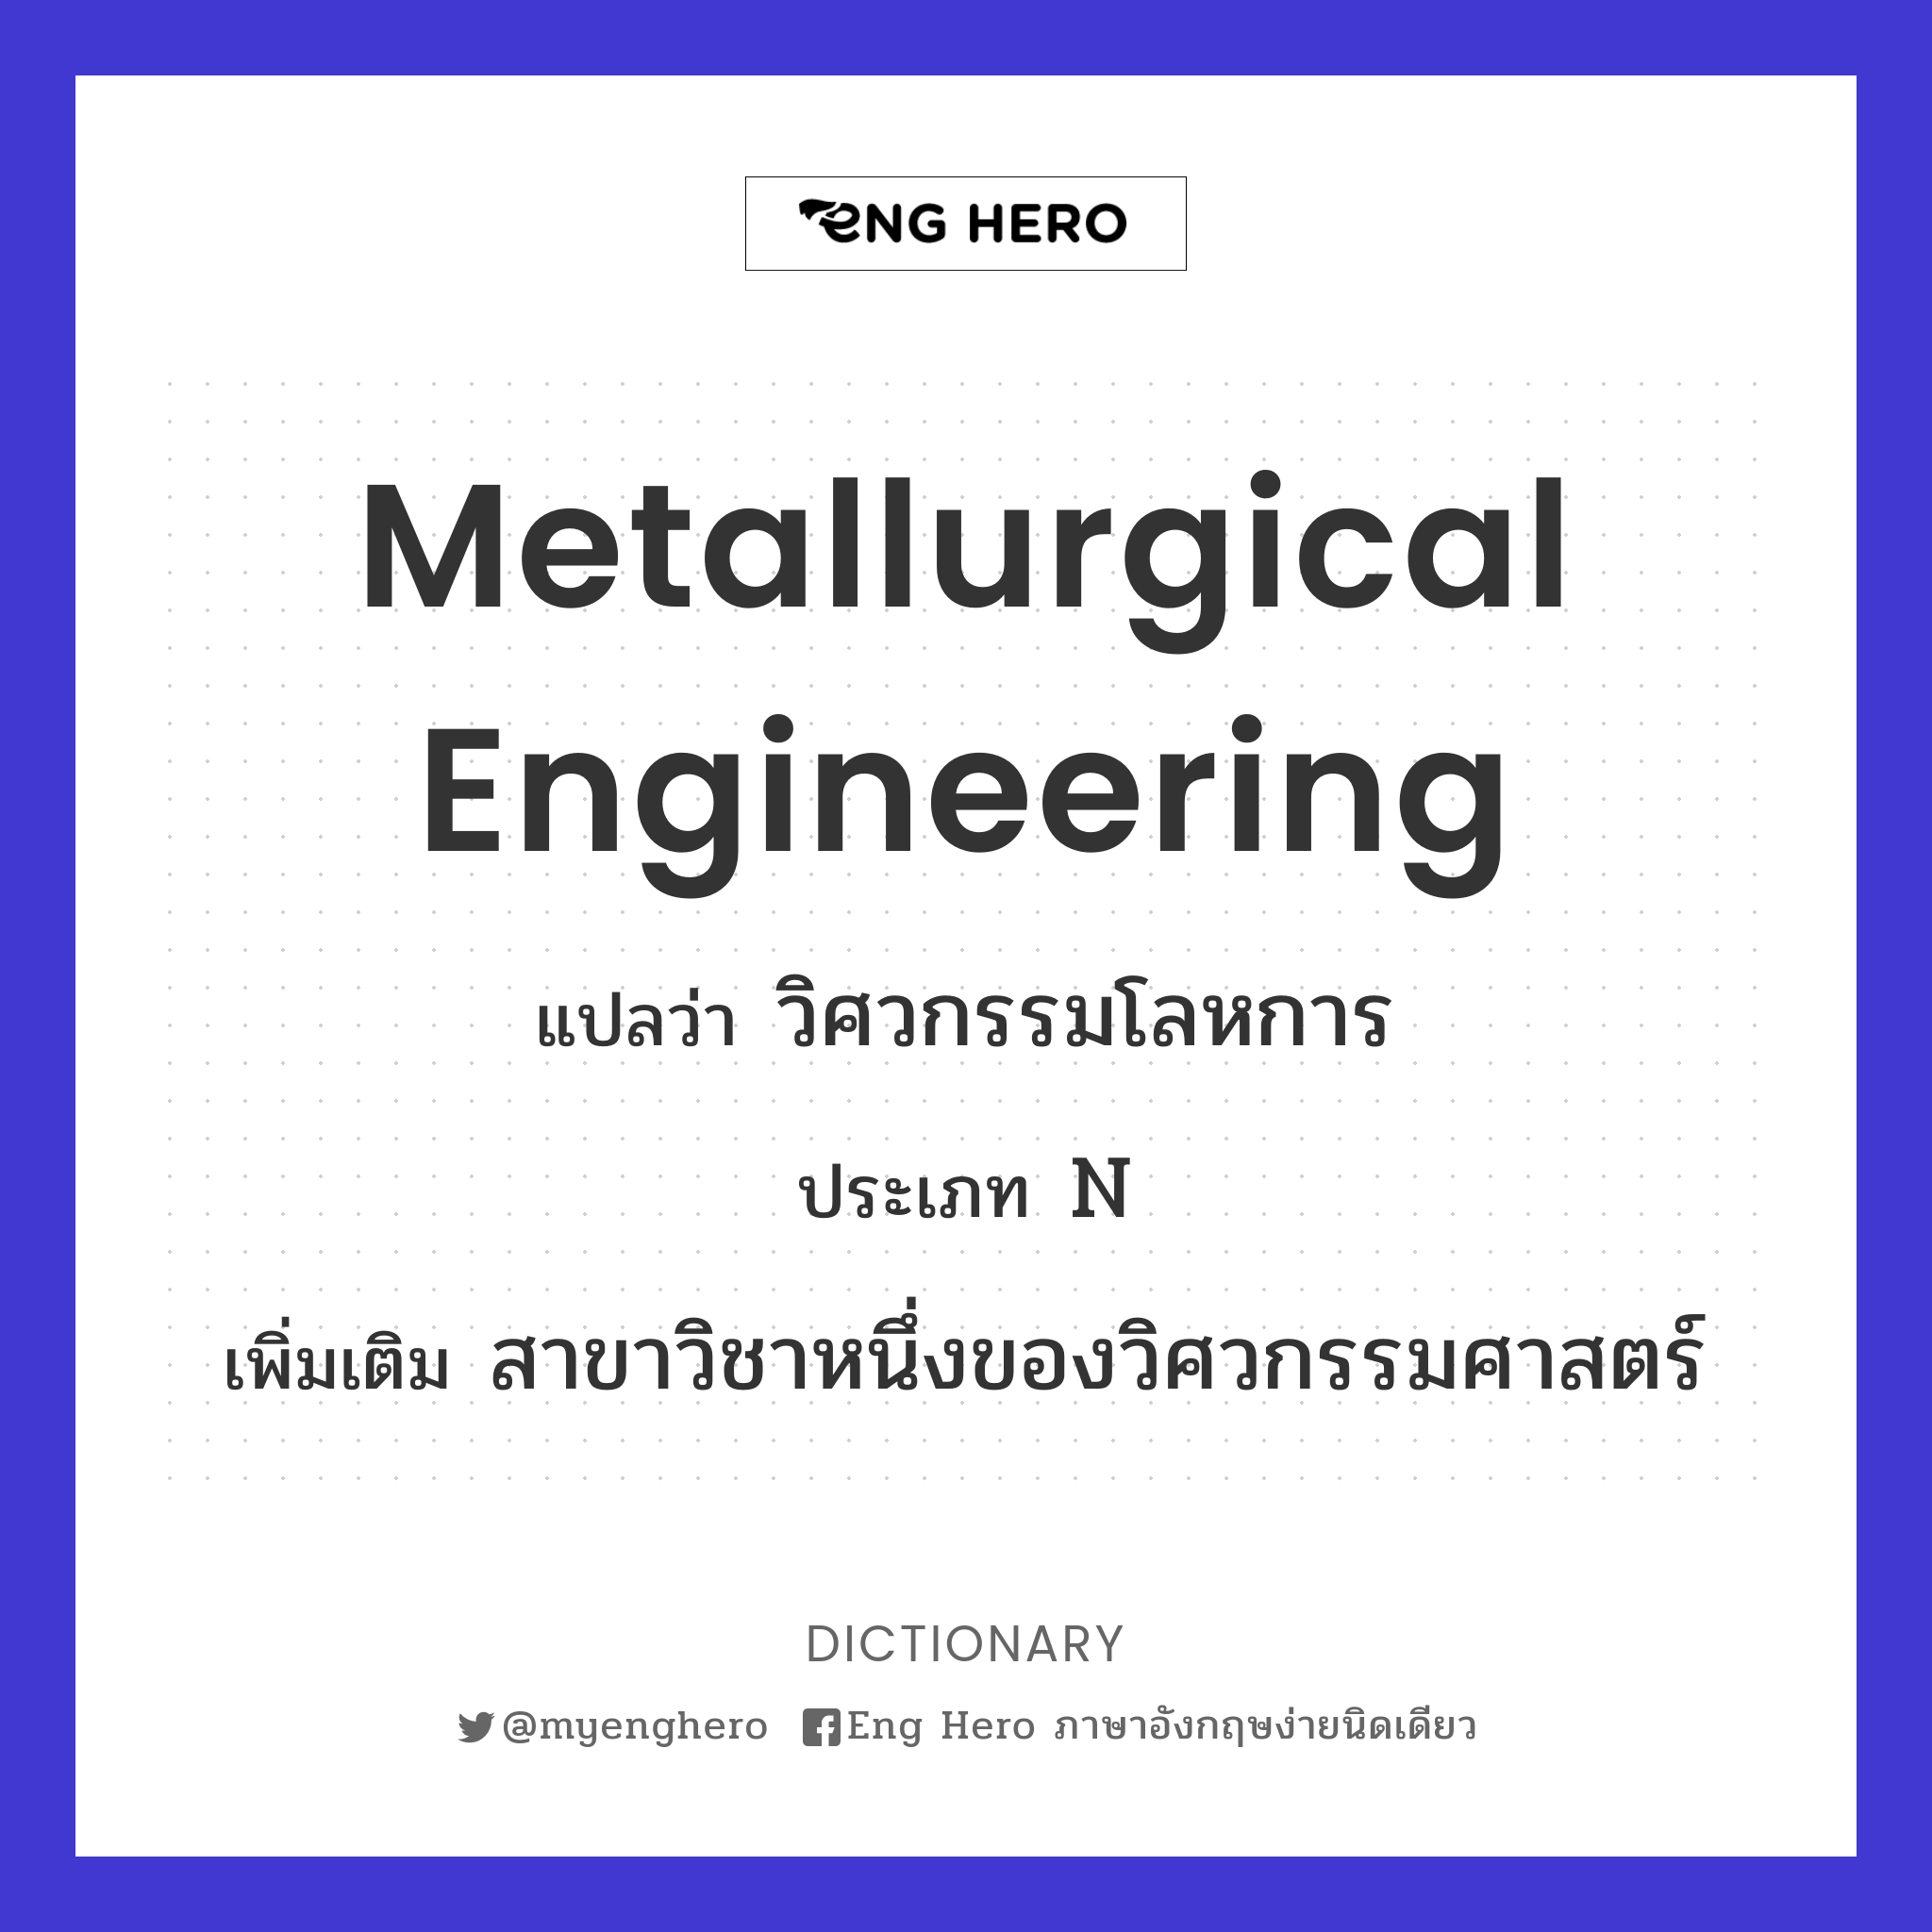 metallurgical engineering